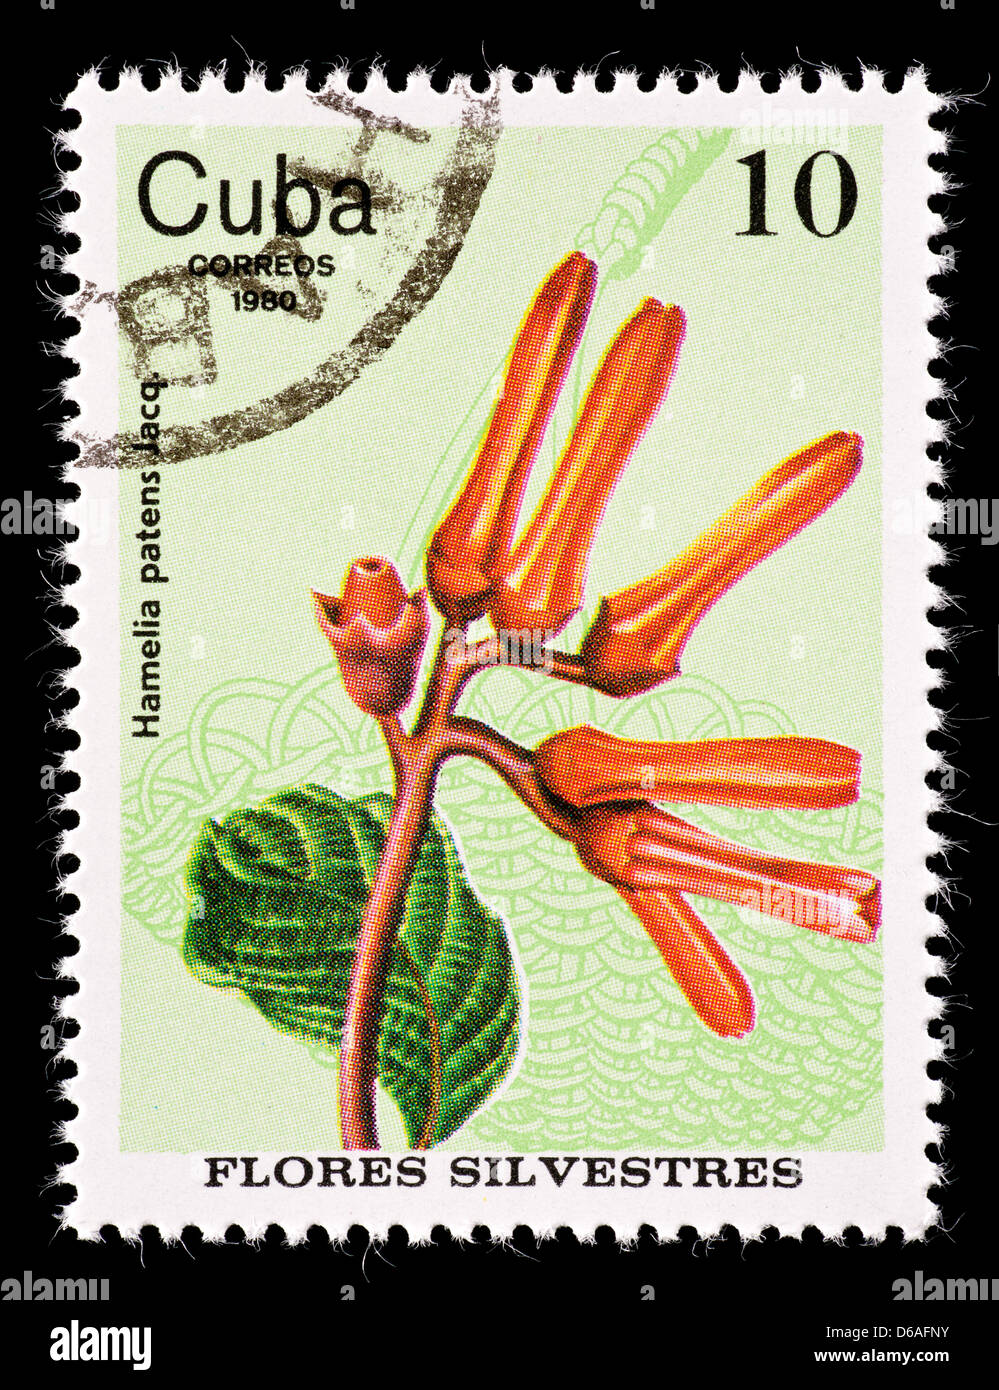 Postage stamp from Cuba depicting firebush flower (Hamelia patens) Stock Photo